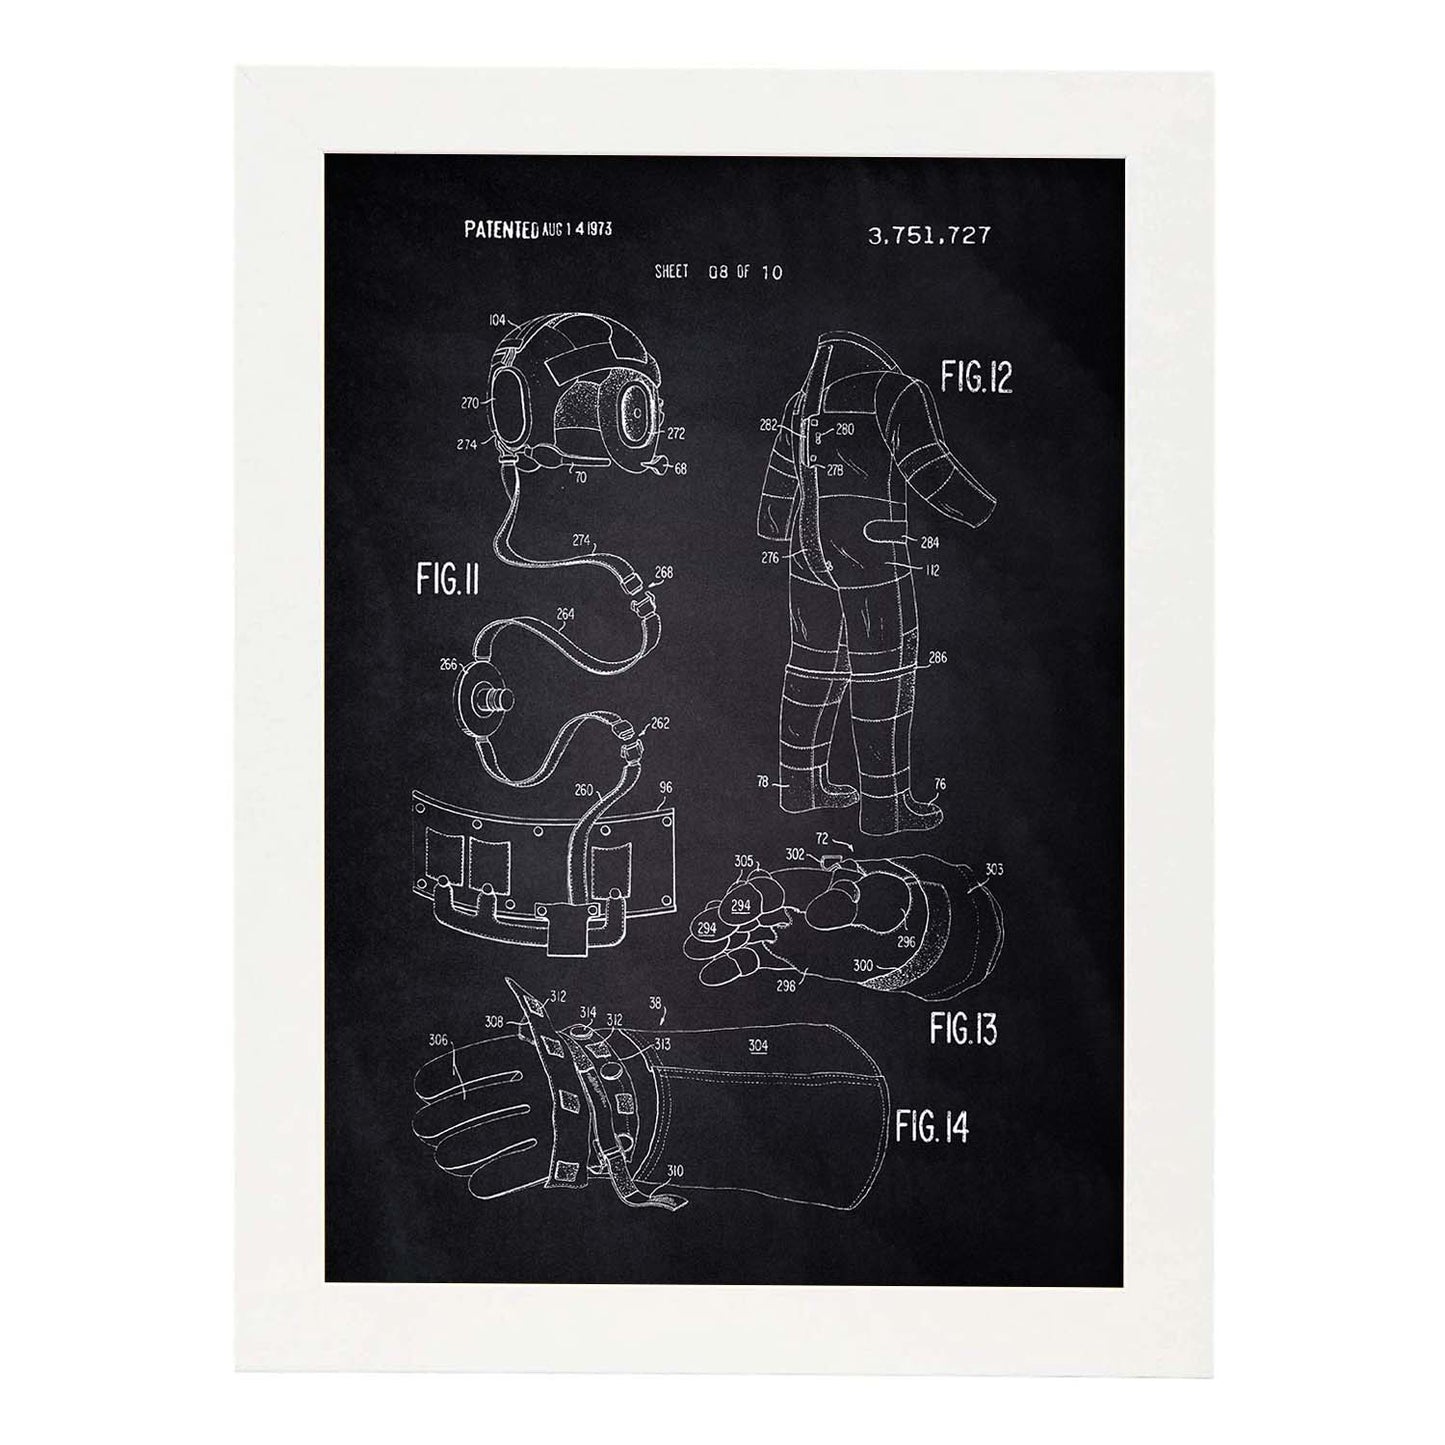 Poster con patente de Ropa astronauta 2. Lámina con diseño de patente antigua-Artwork-Nacnic-A4-Marco Blanco-Nacnic Estudio SL